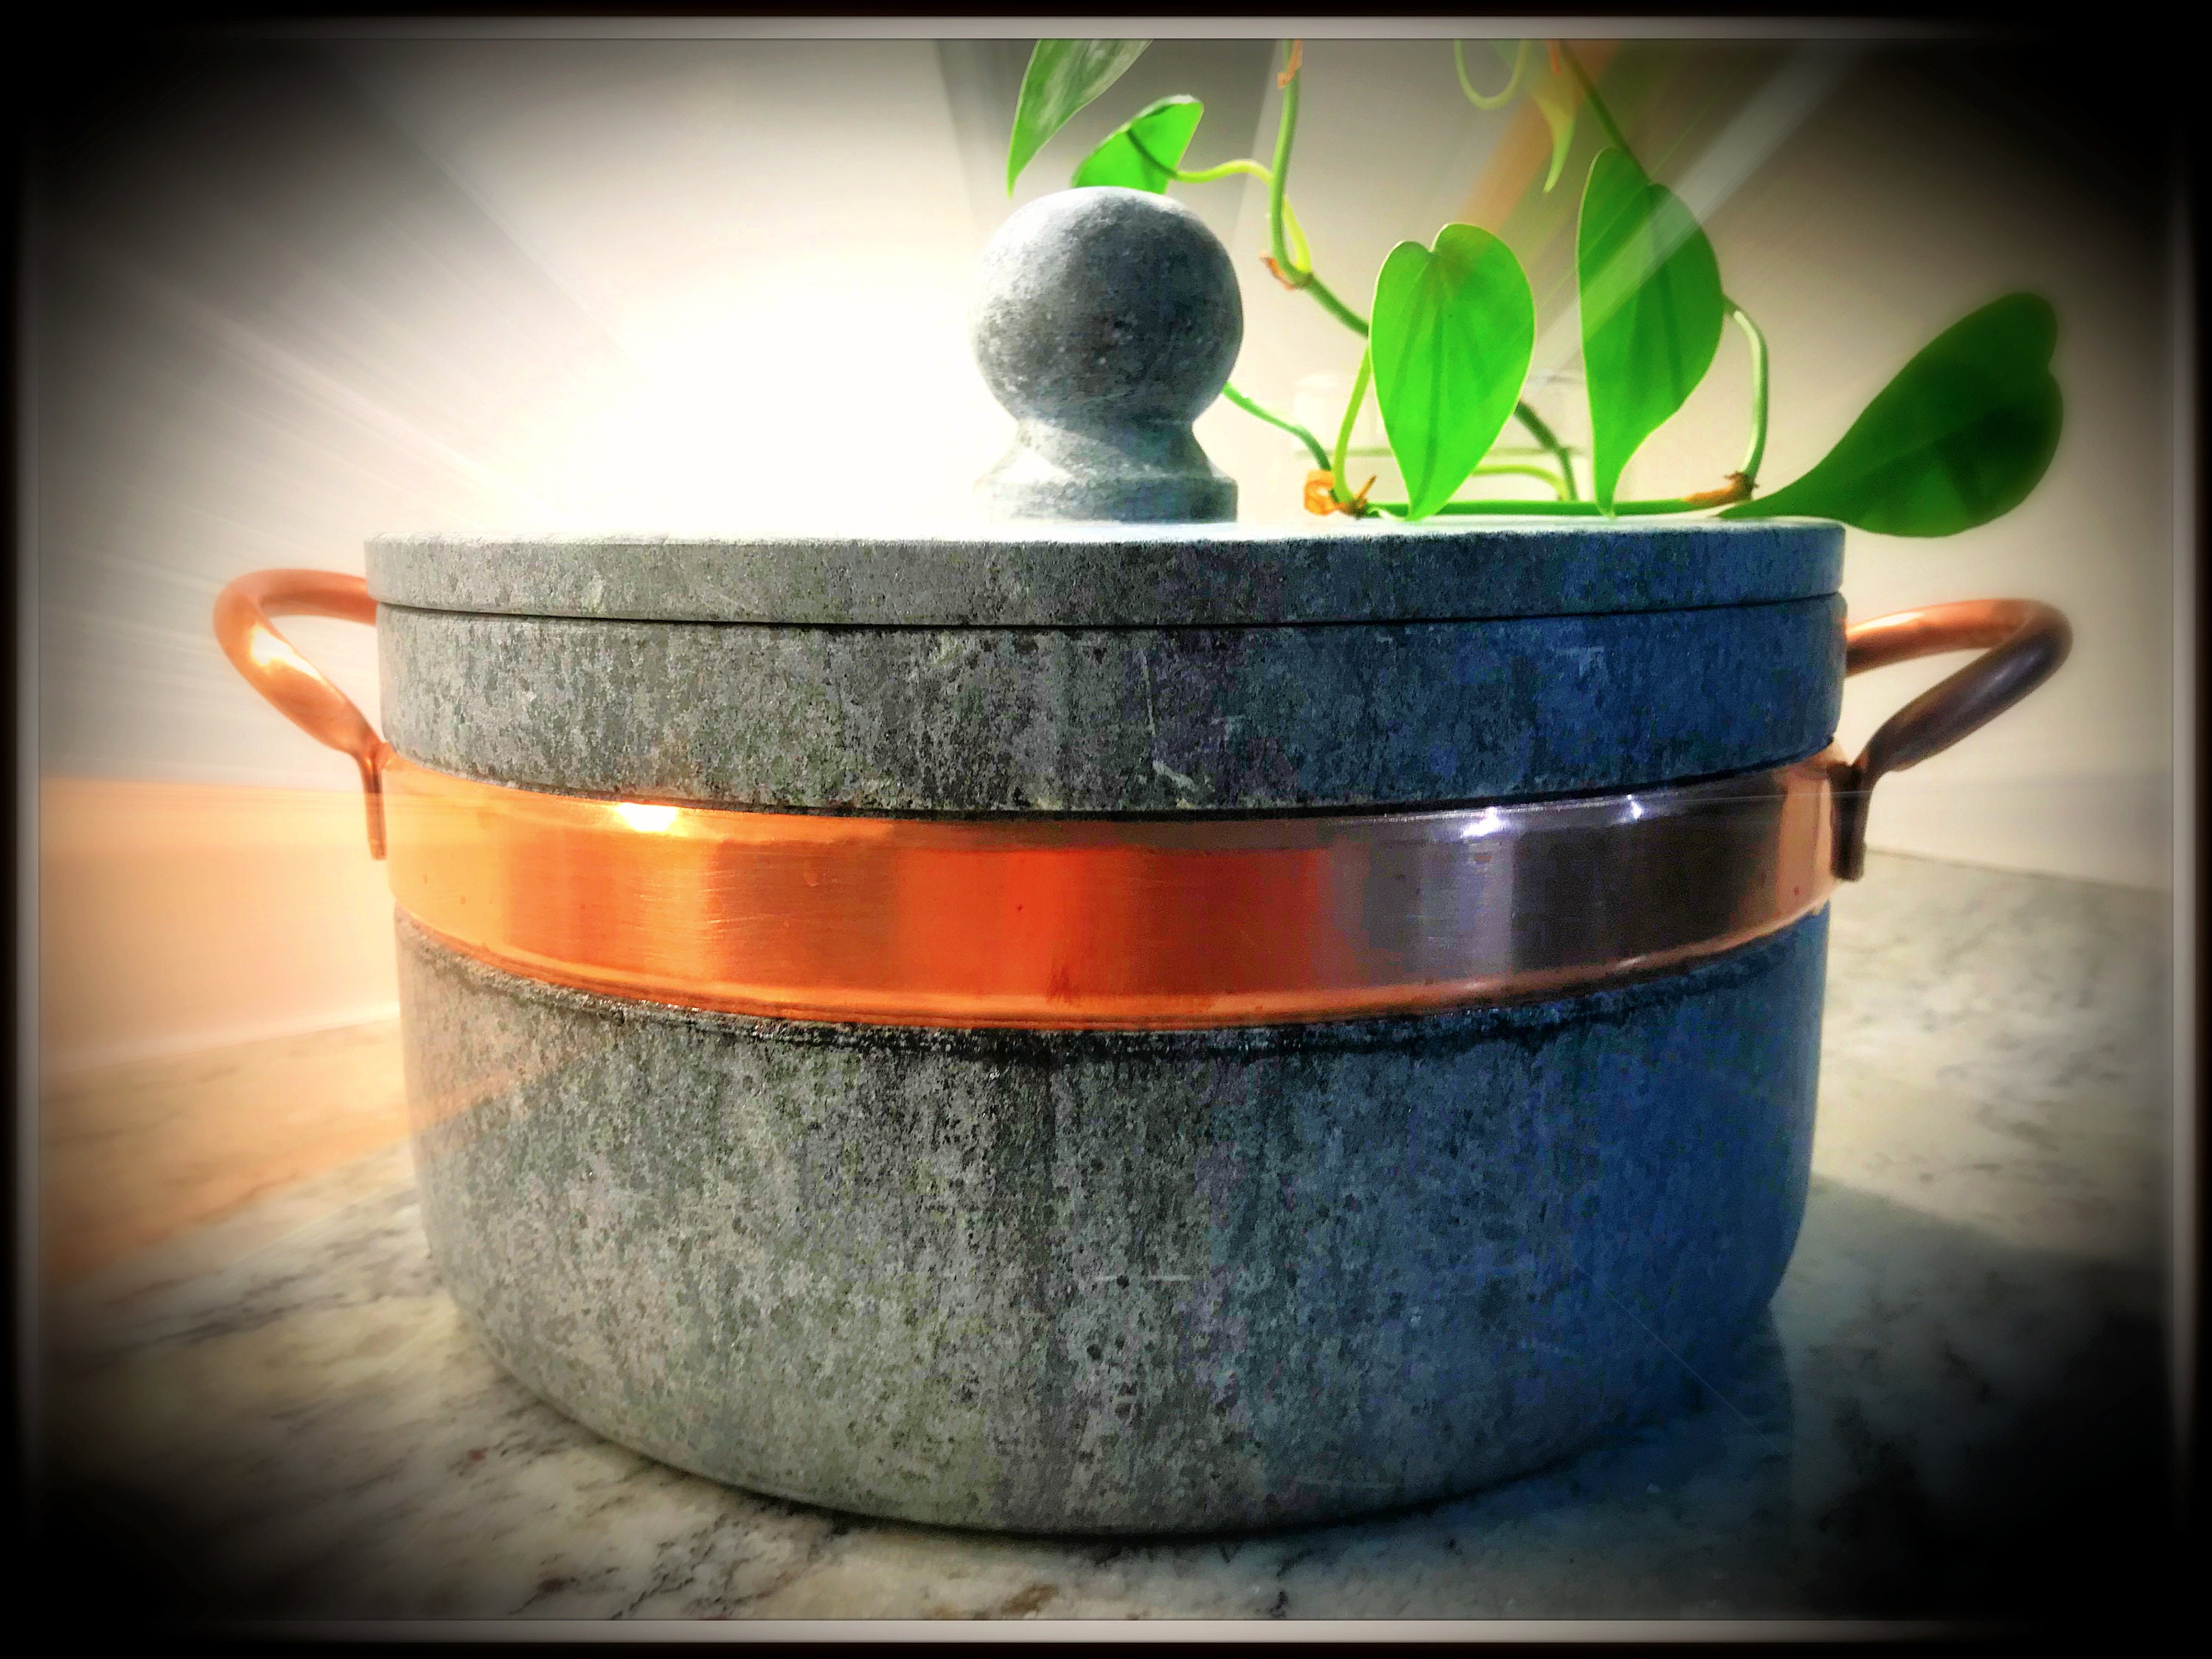 Soapstone Cookware Pot 3.0 Liters/3.2 Quart 